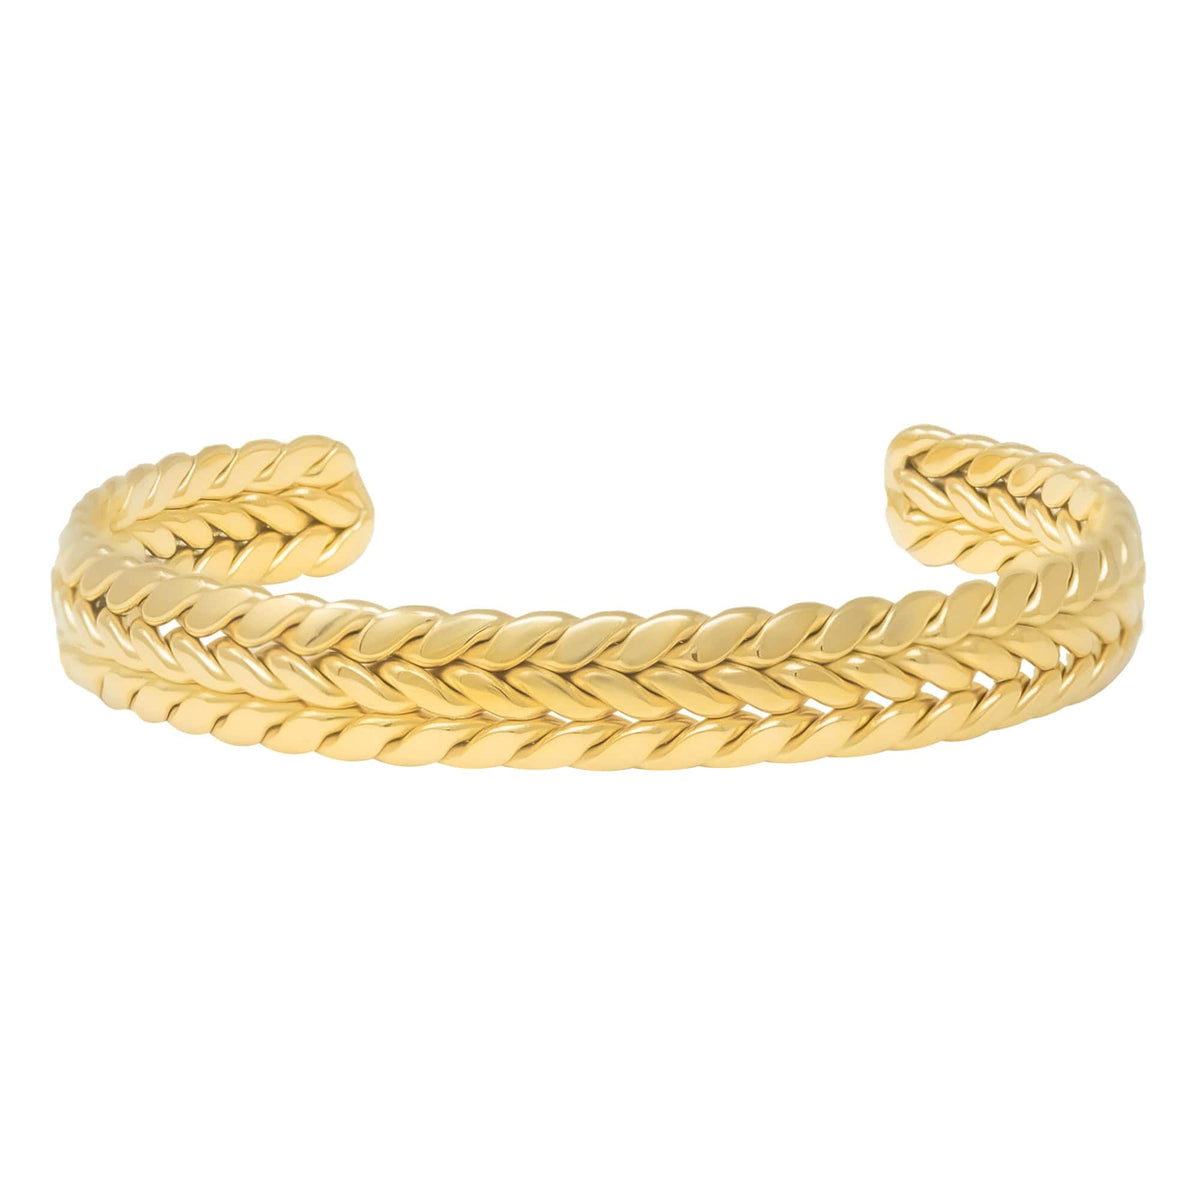 BohoMoon Stainless Steel Indie Cuff Bracelet Gold